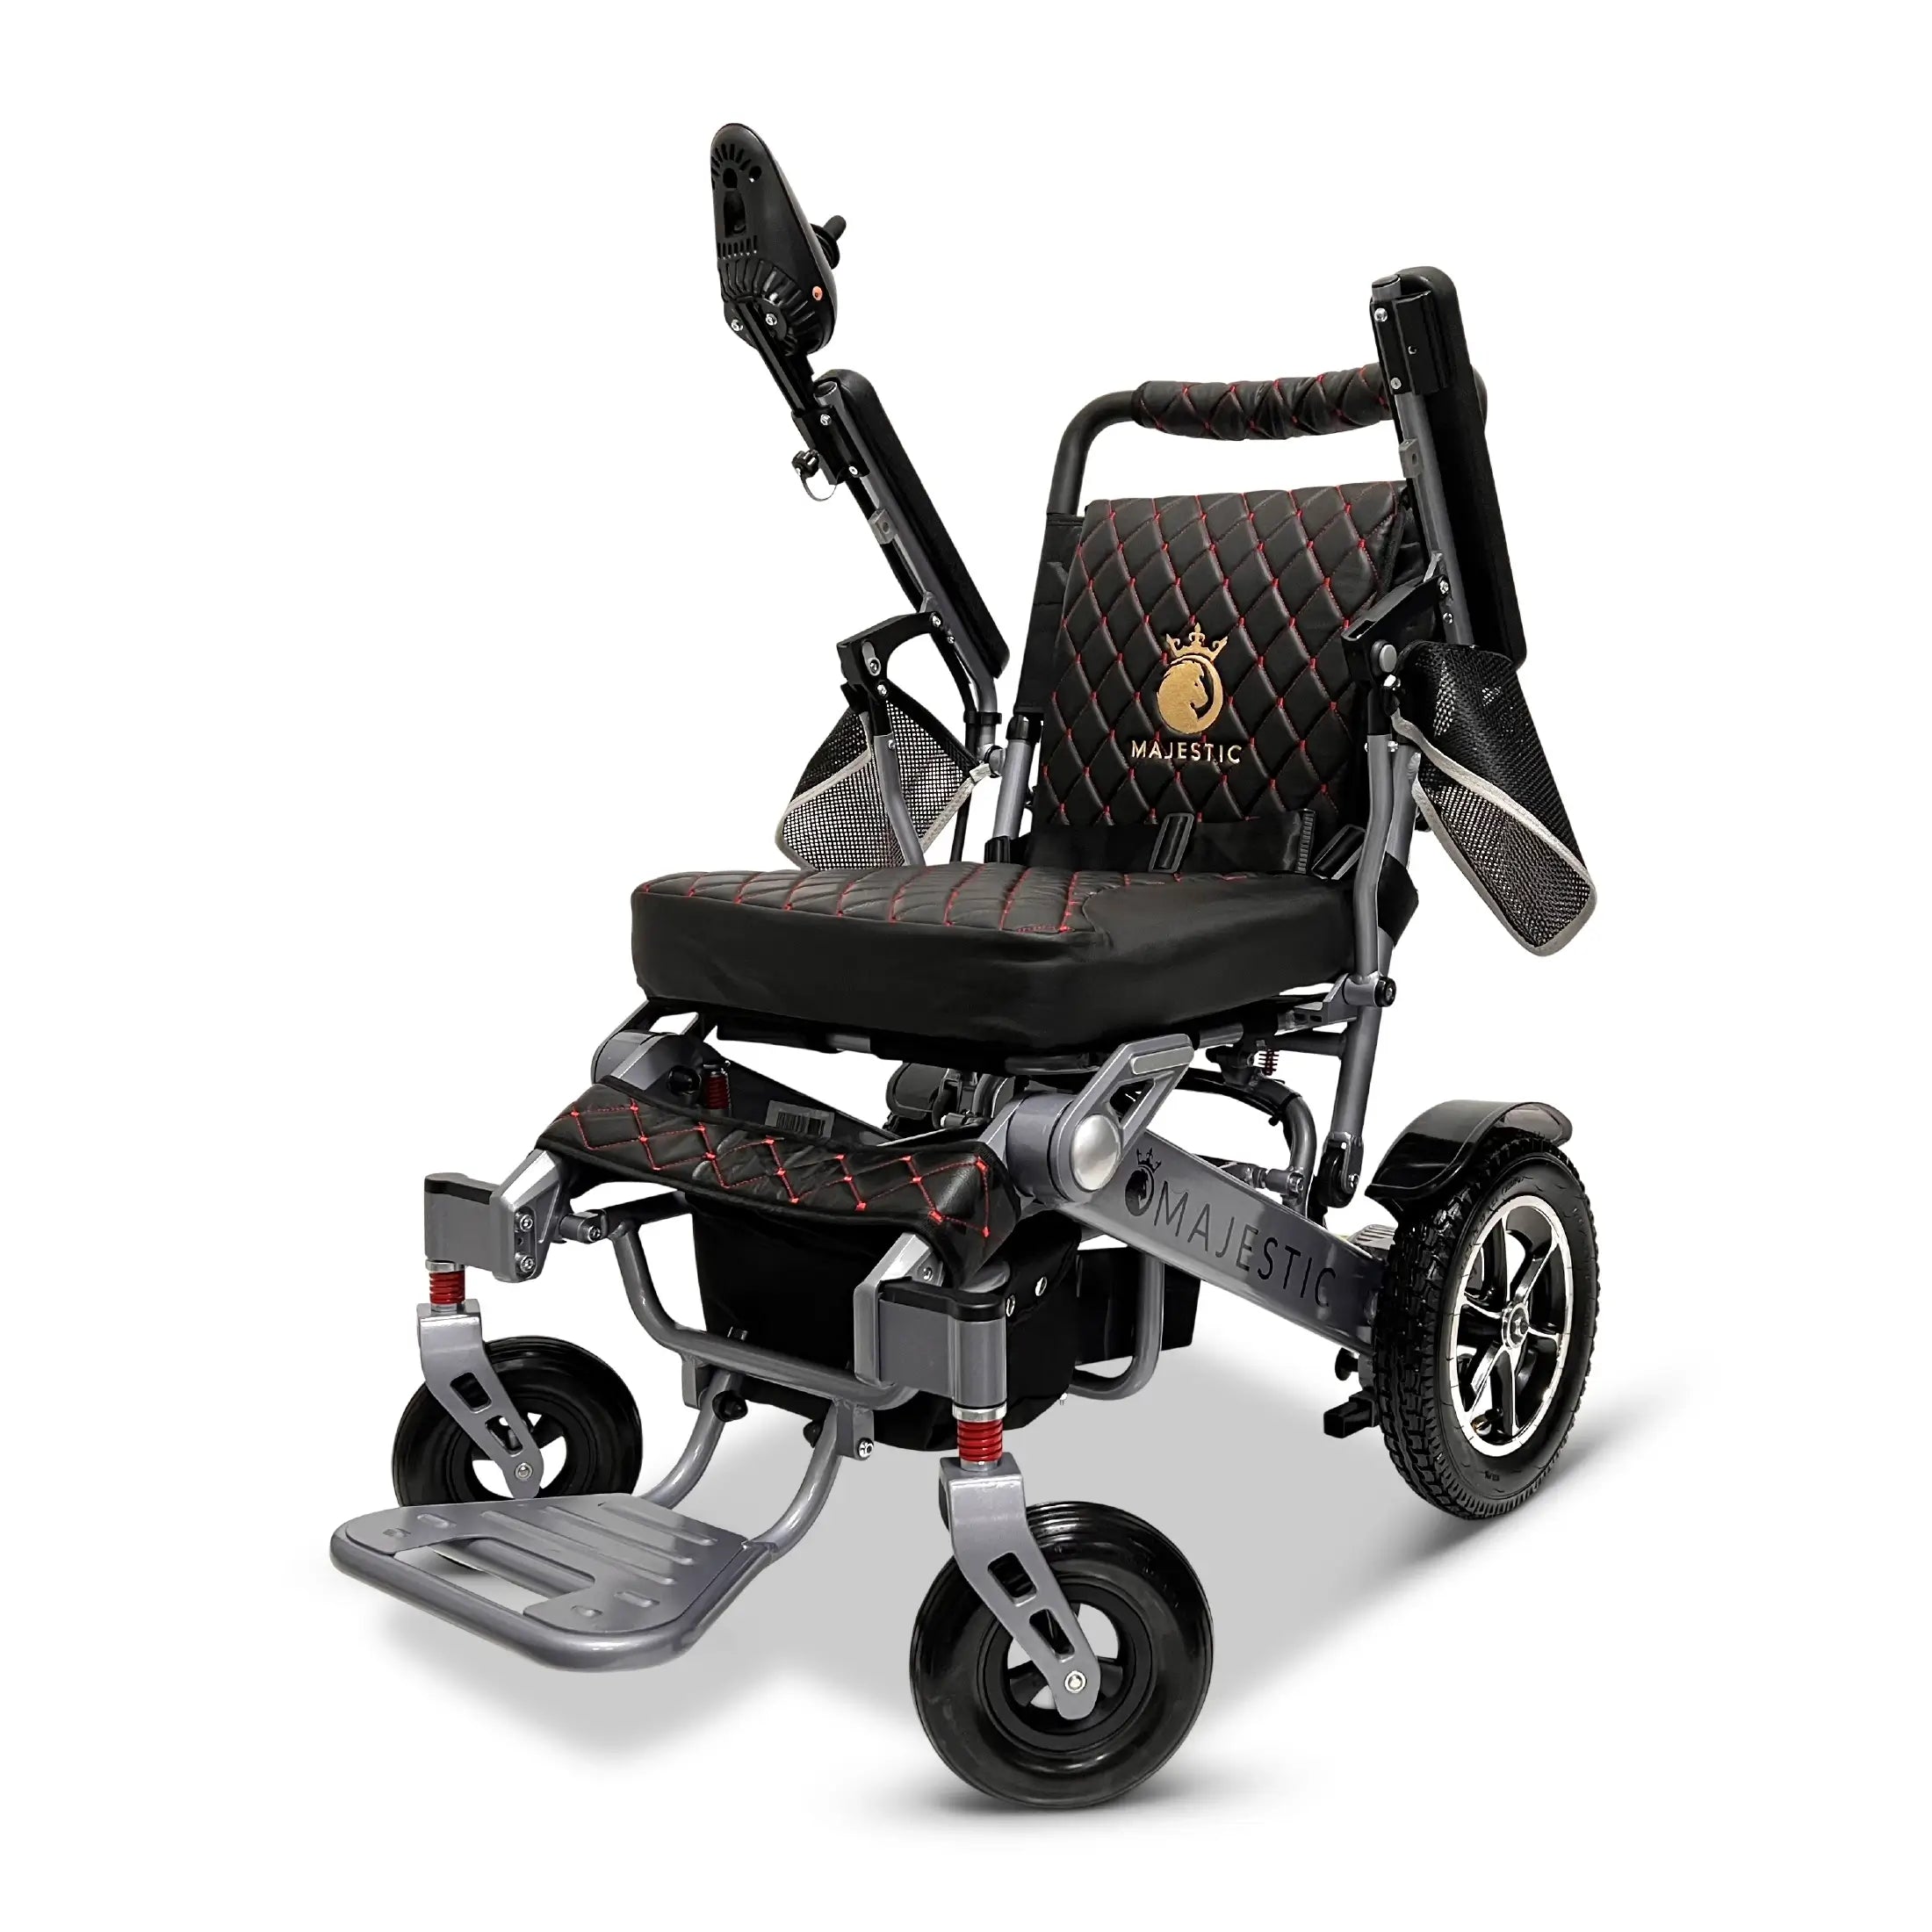 MAJESTIC IQ-7000 Auto Folding Remote Controlled Electric Wheelchair